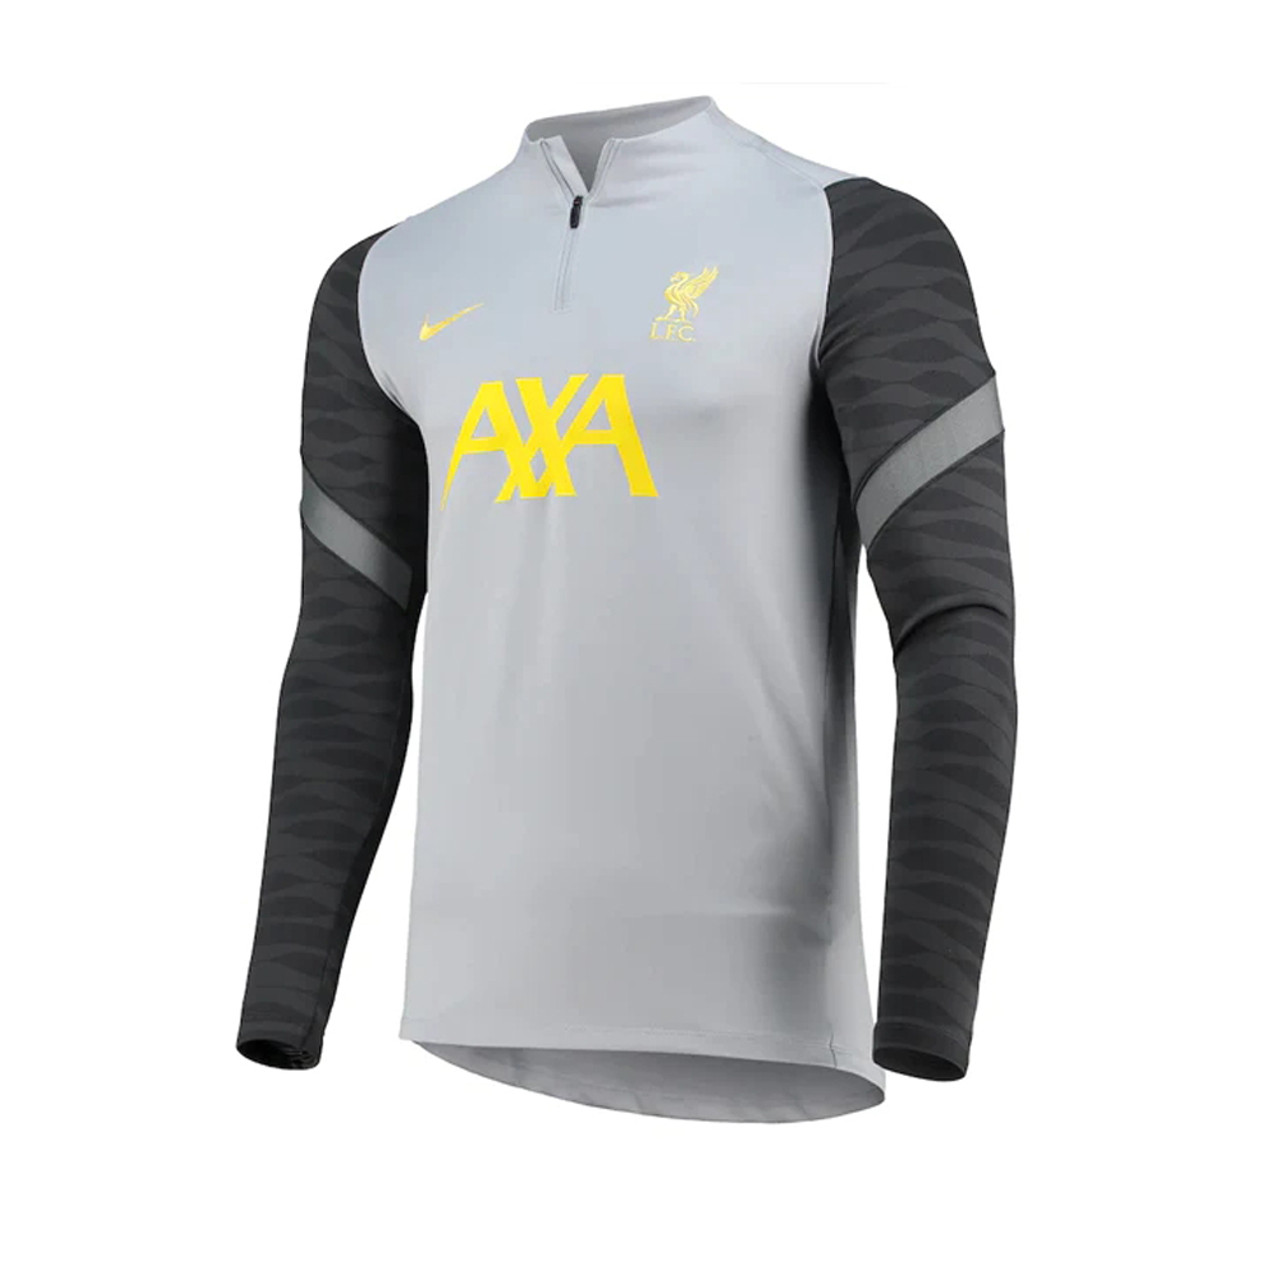 Nike Men's Dri-FIT Strike Short-Sleeve Soccer Shirt